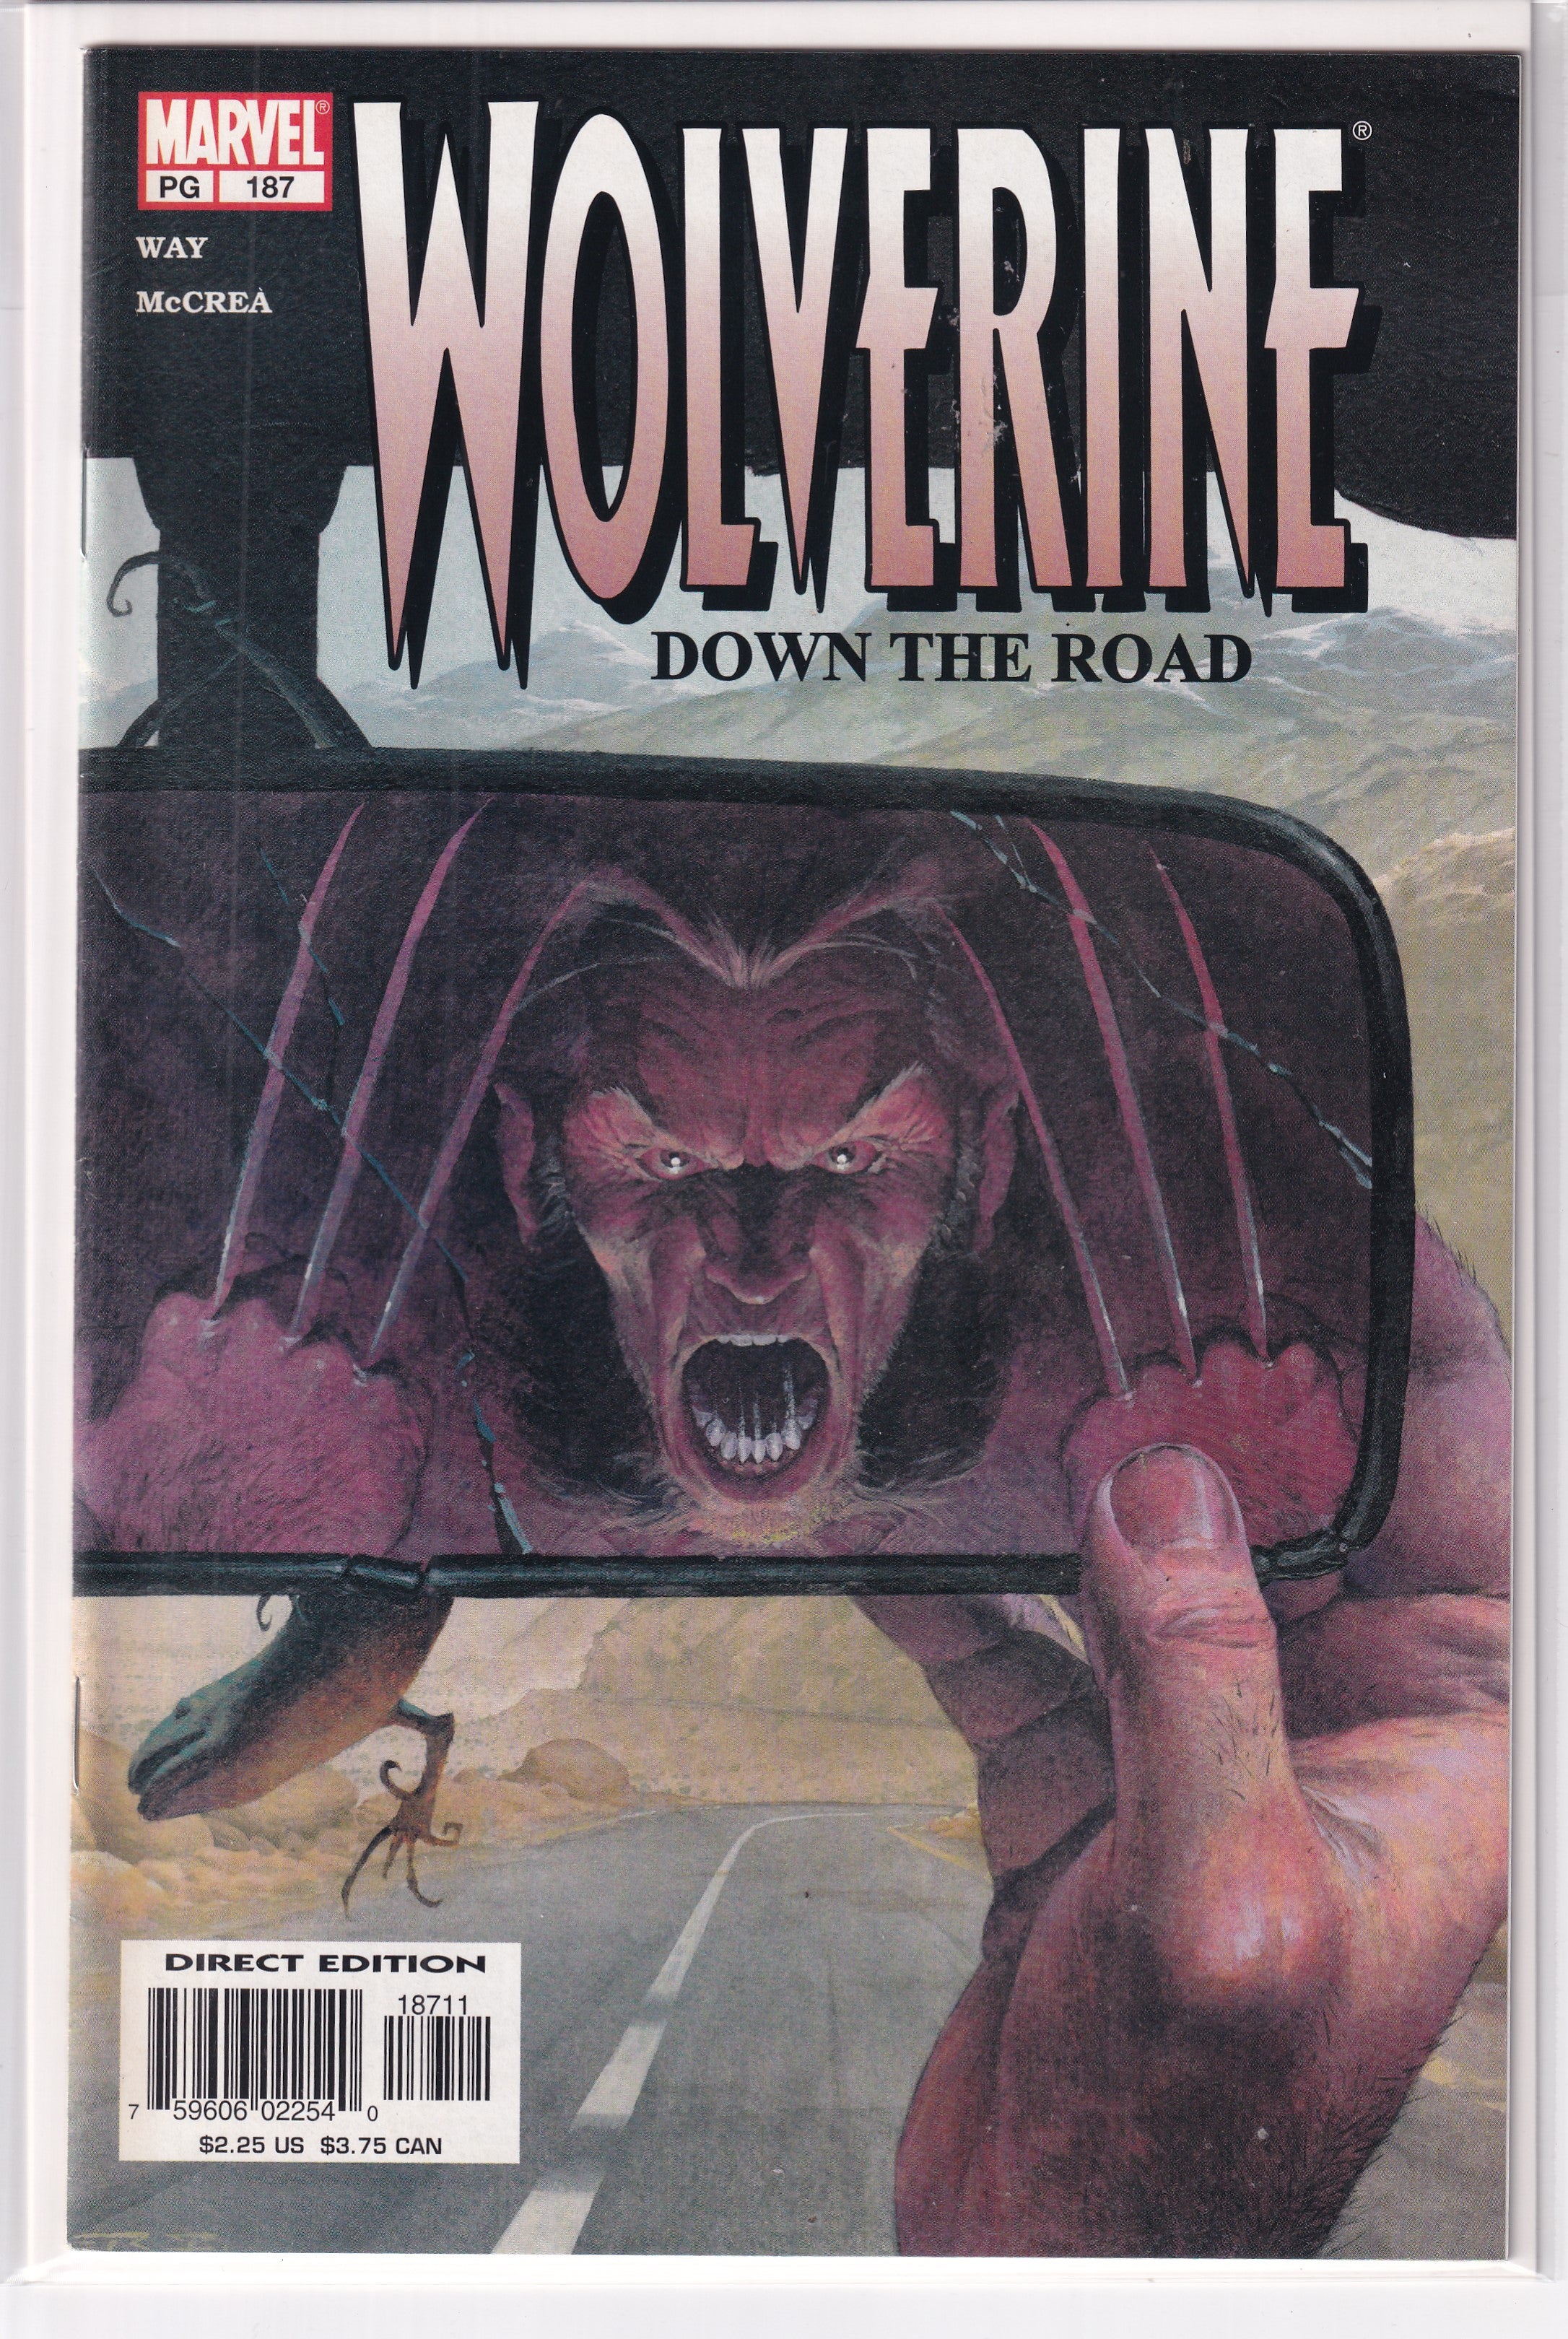 WOLVERINE DOWN THE ROAD #187 - Slab City Comics 